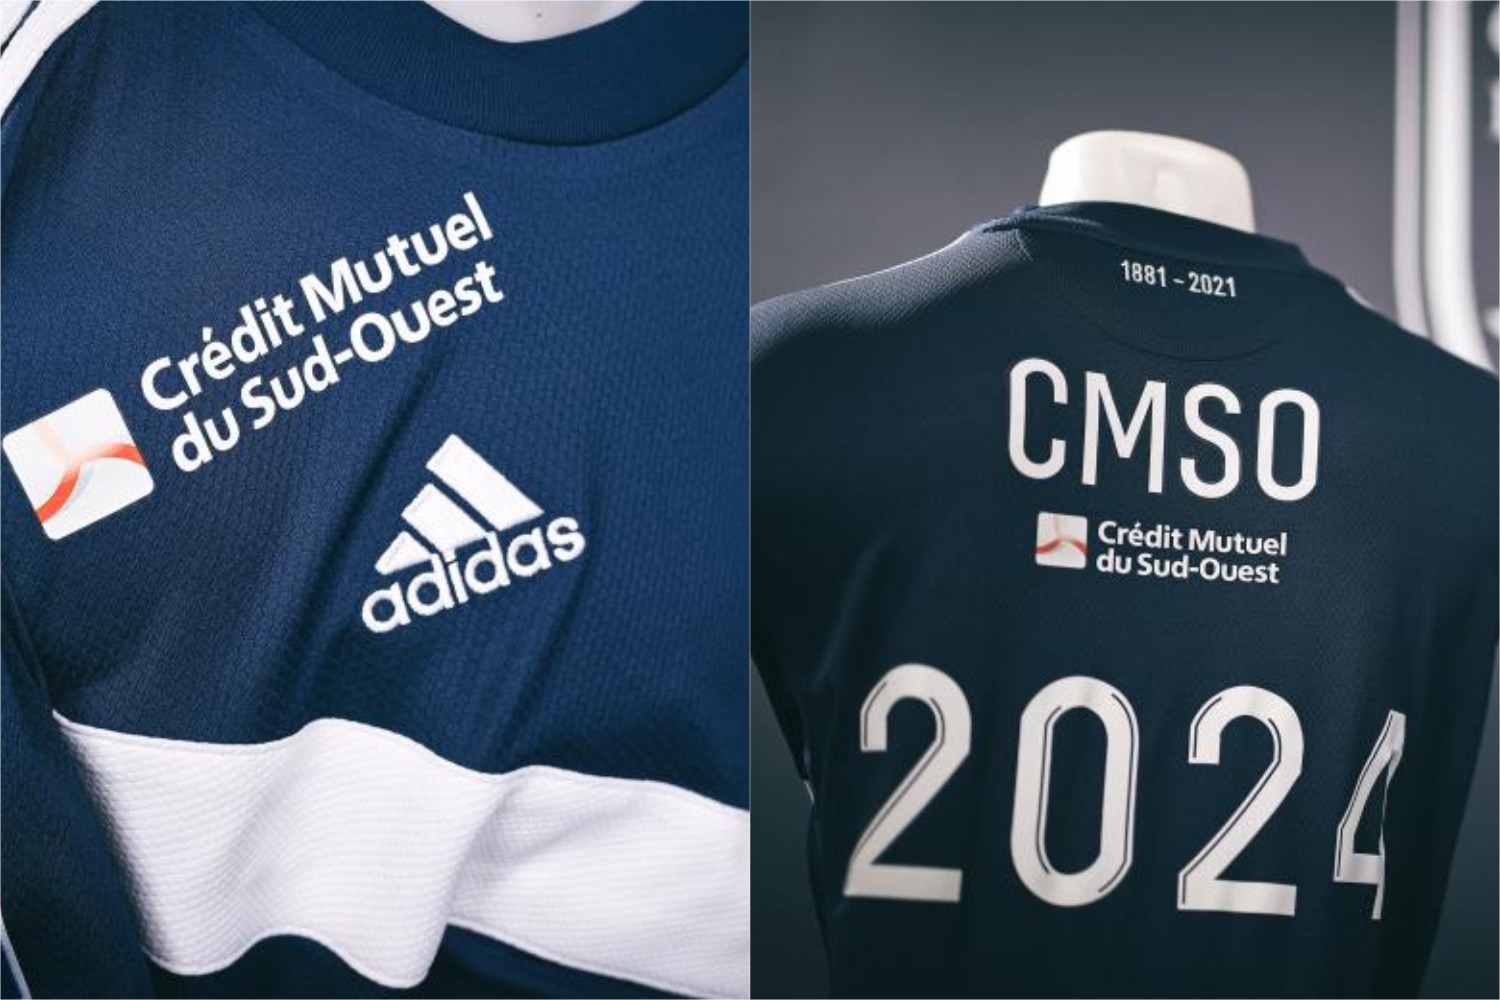 New sponsor of Girondins jersey for men and women